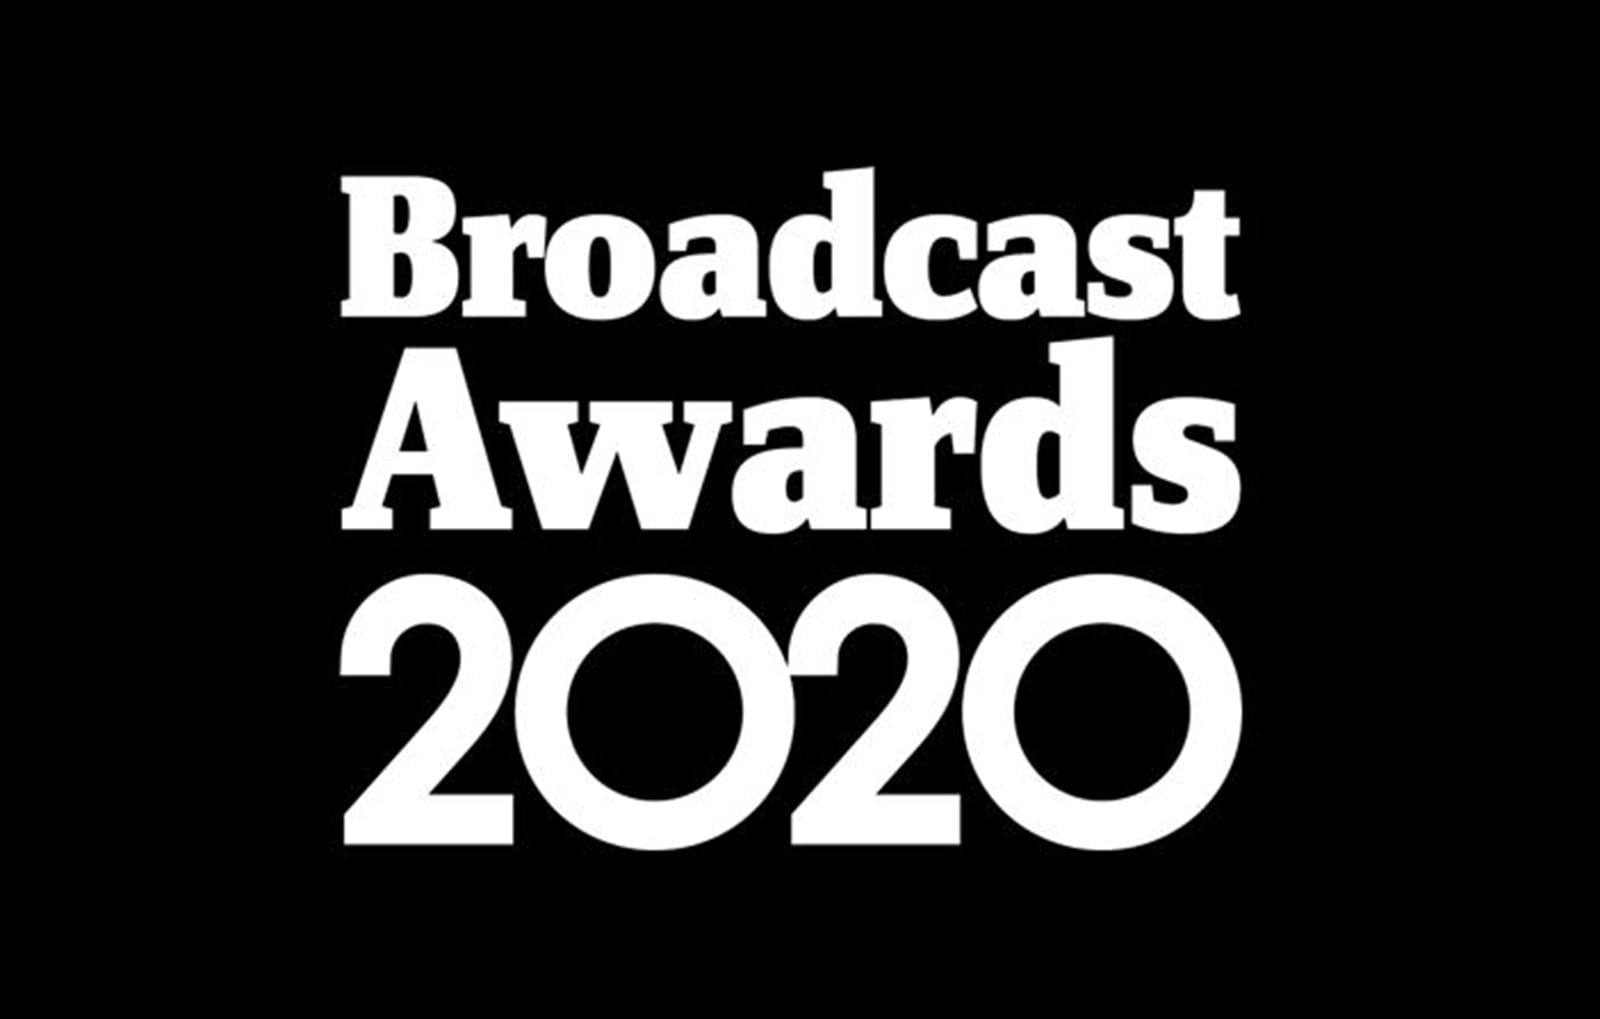 Shortlist success for Firecracker Films and Sunset+Vine at 2020 Broadcast Awards